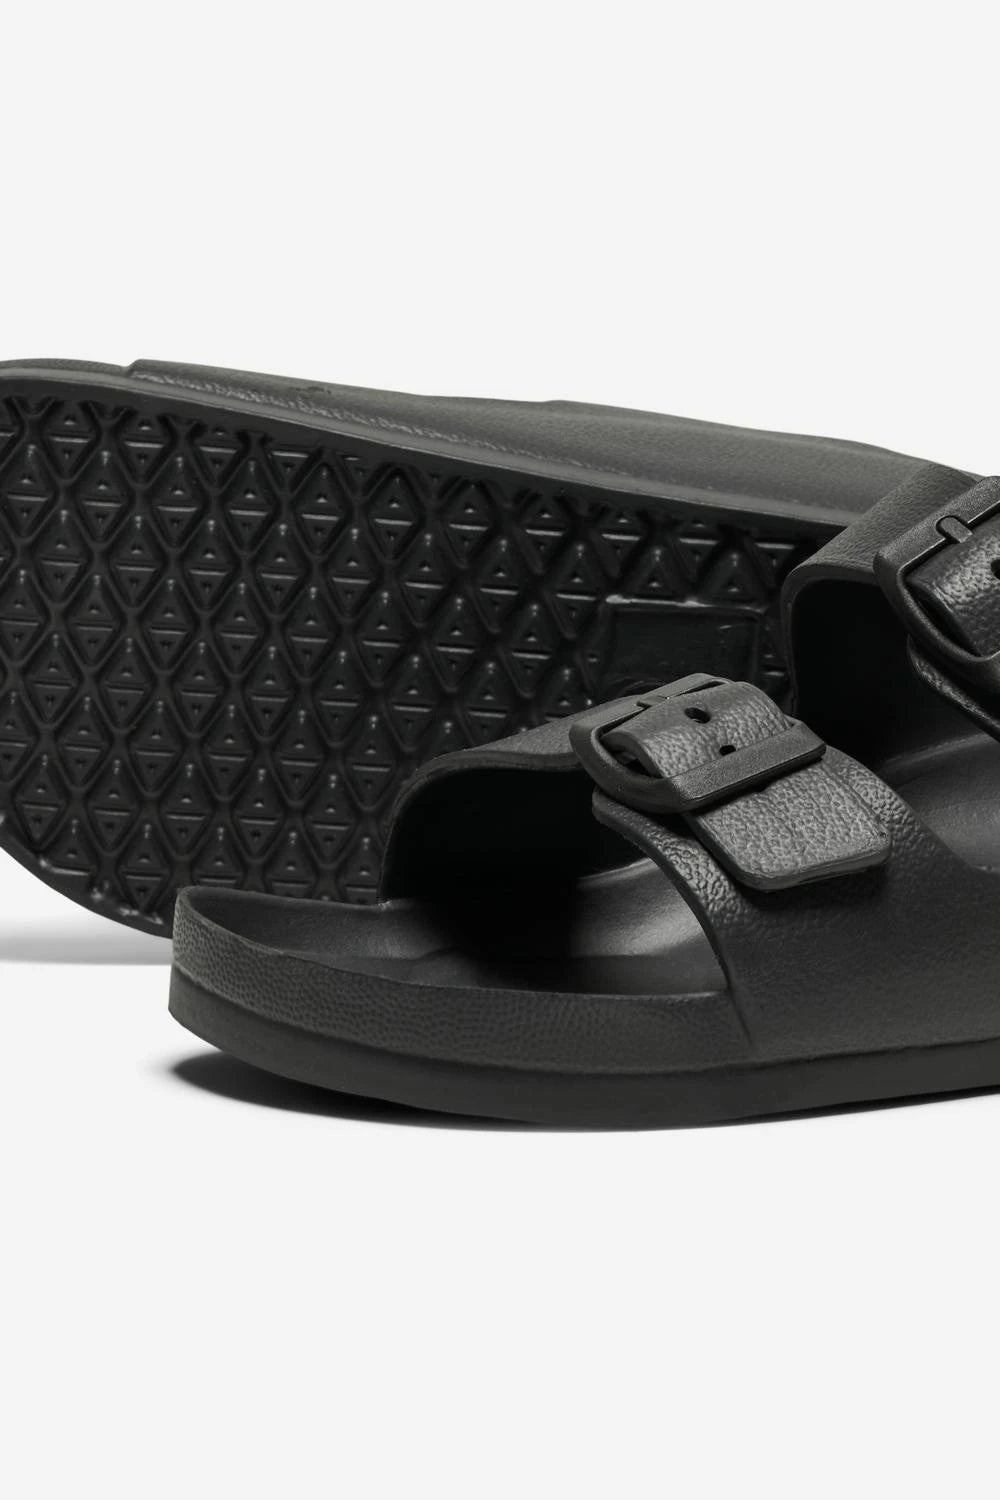 CRISTY Slide Sandal in Black